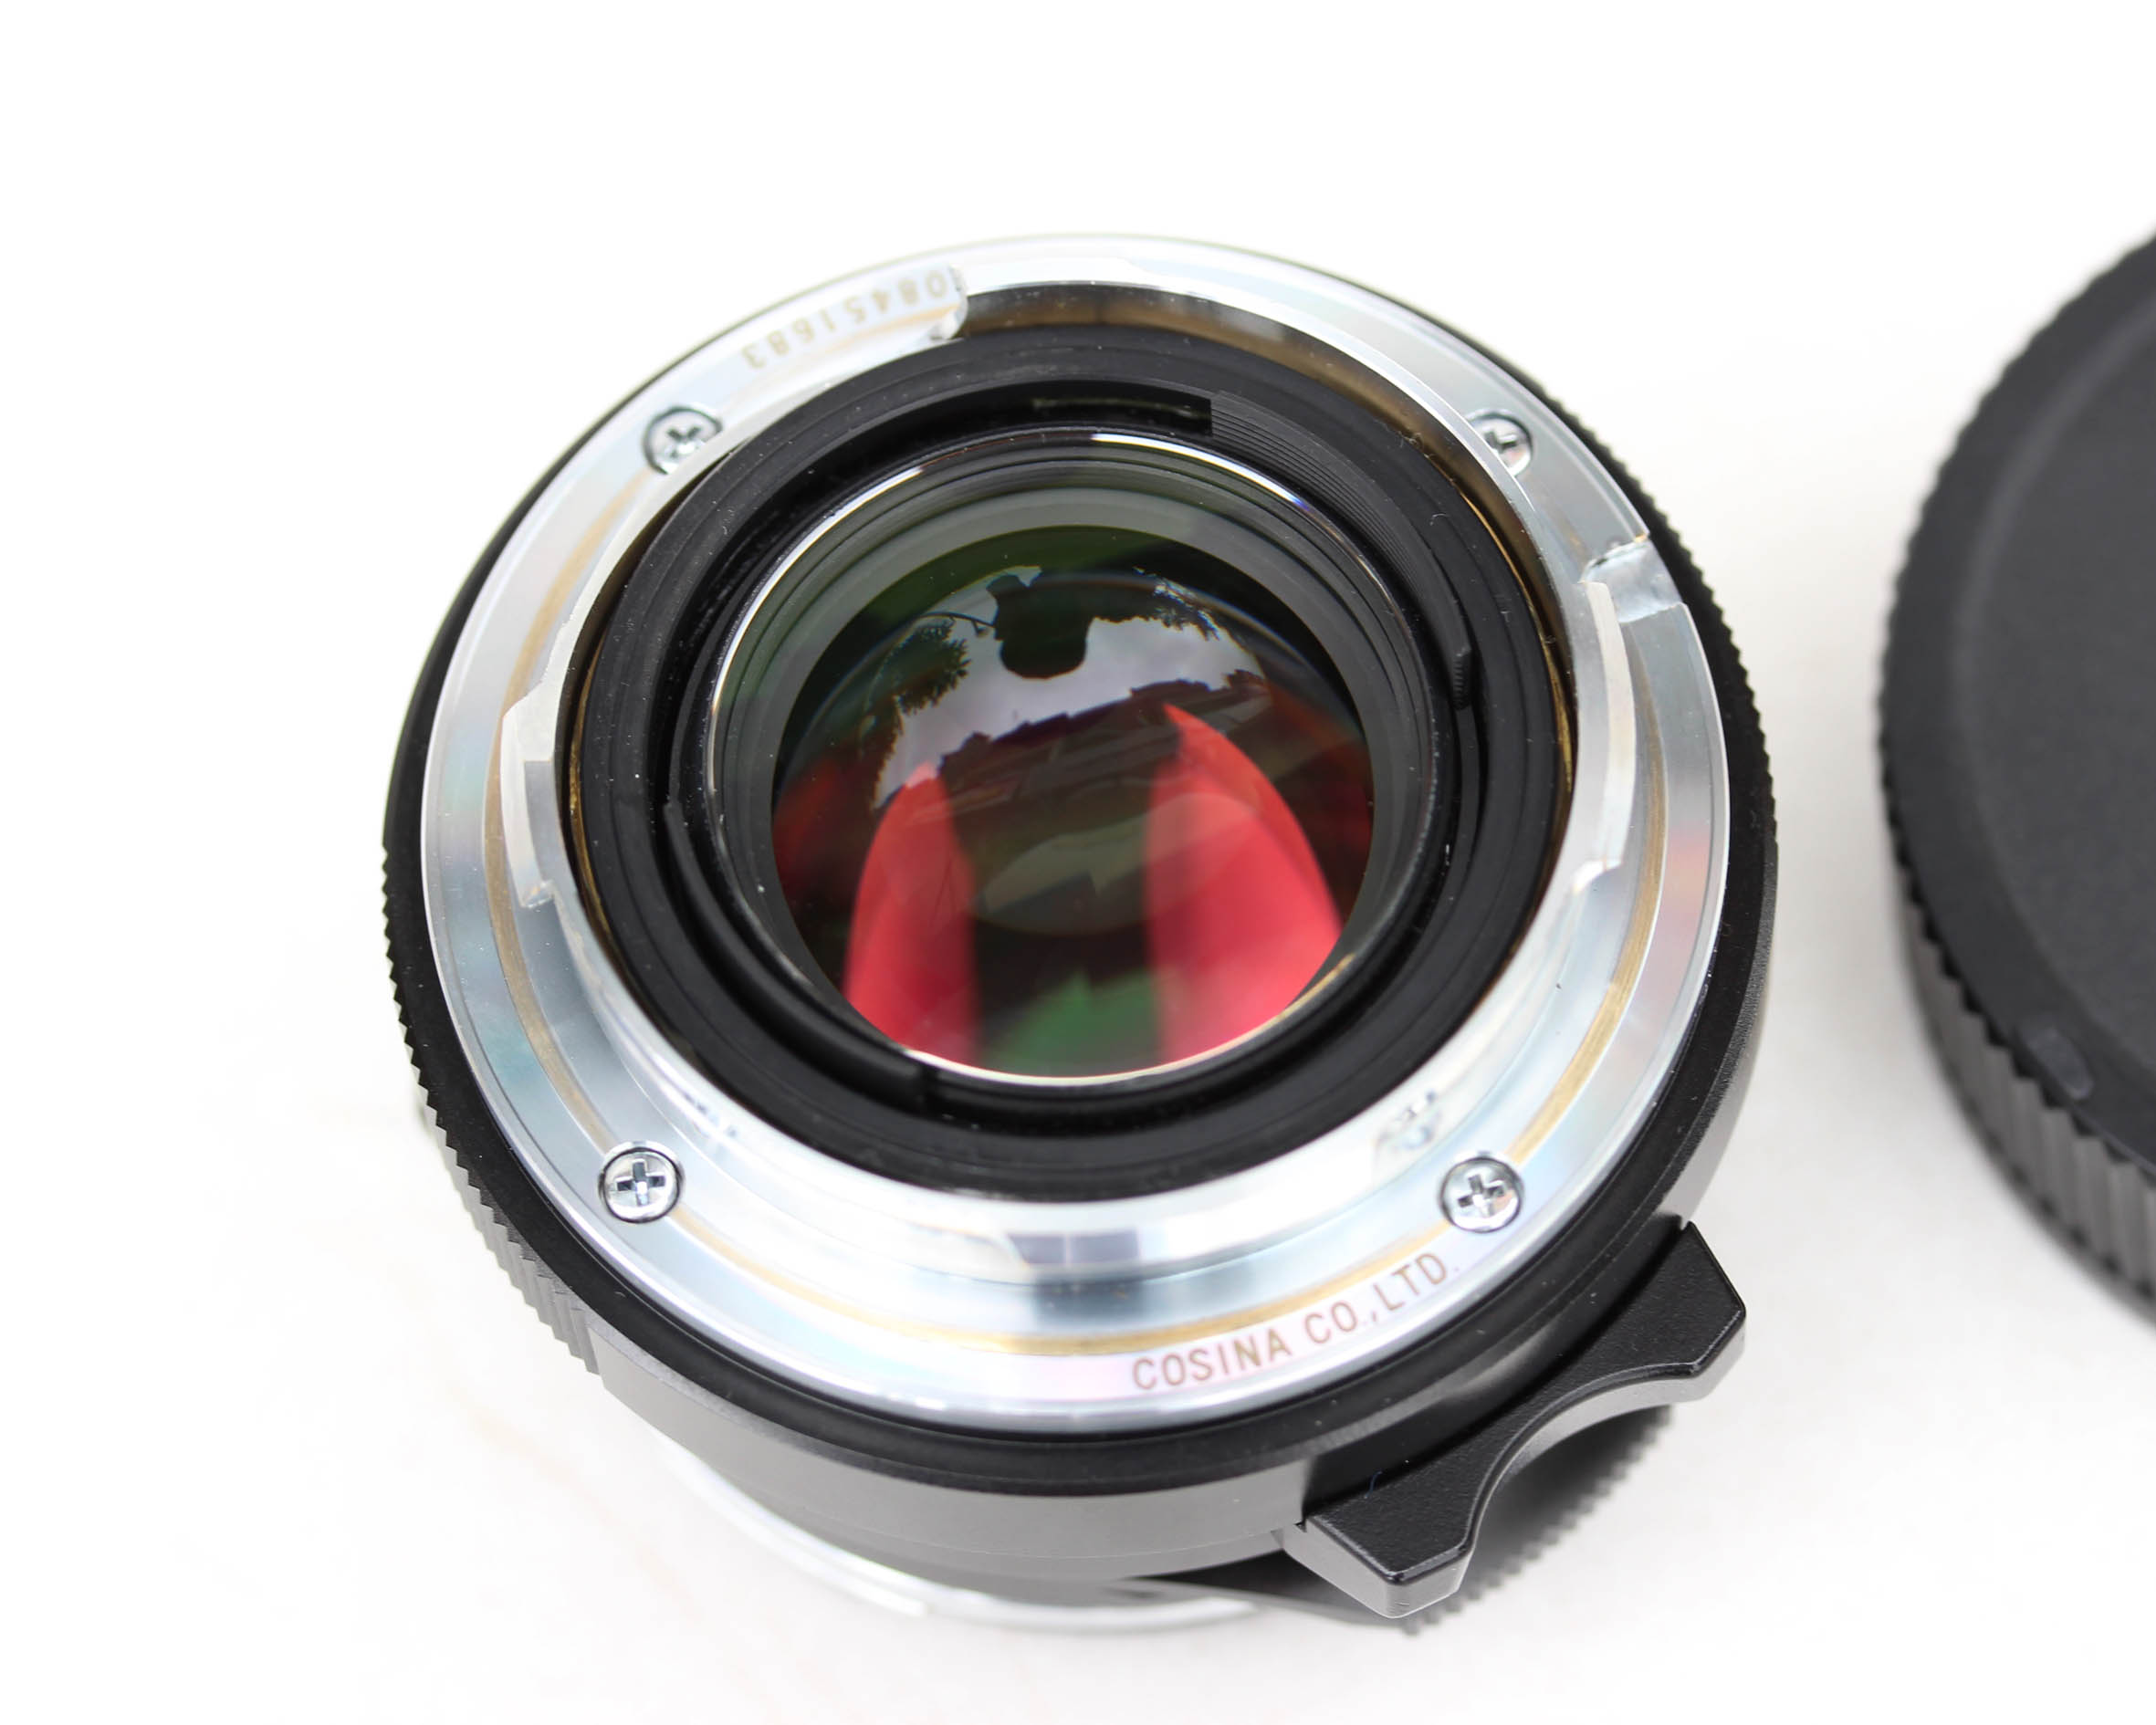 Ống Kính Voigtlander Nokton Classic 35mm f/1.4 for Leica M